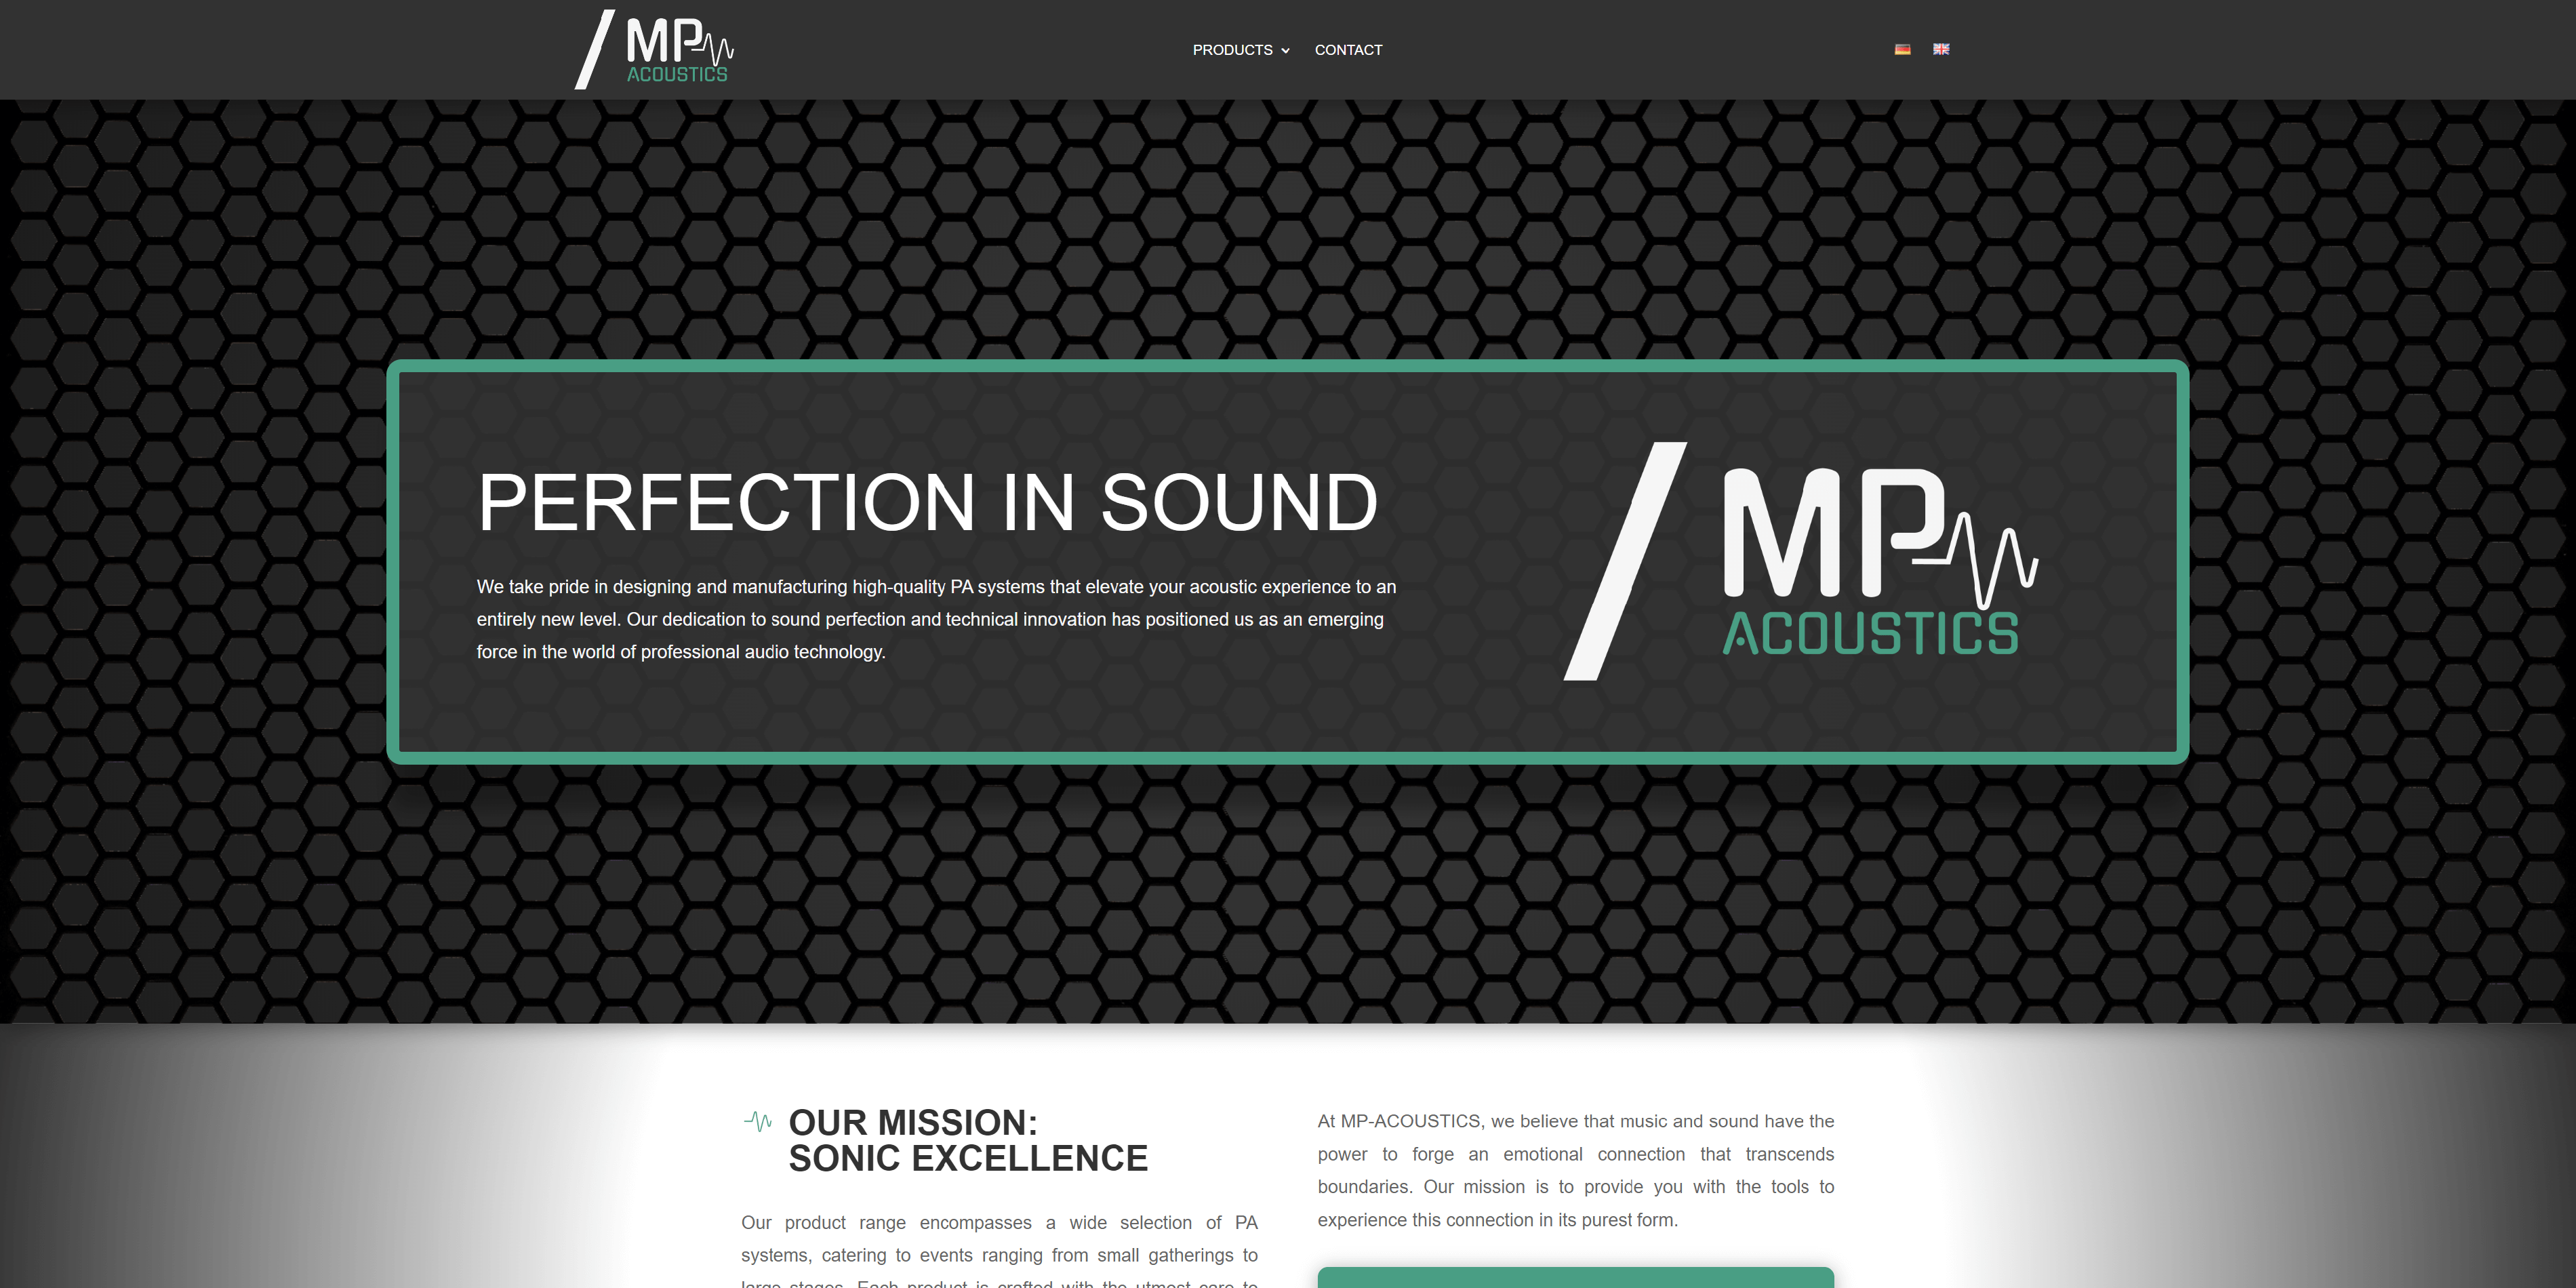 MP-ACOUSTICS